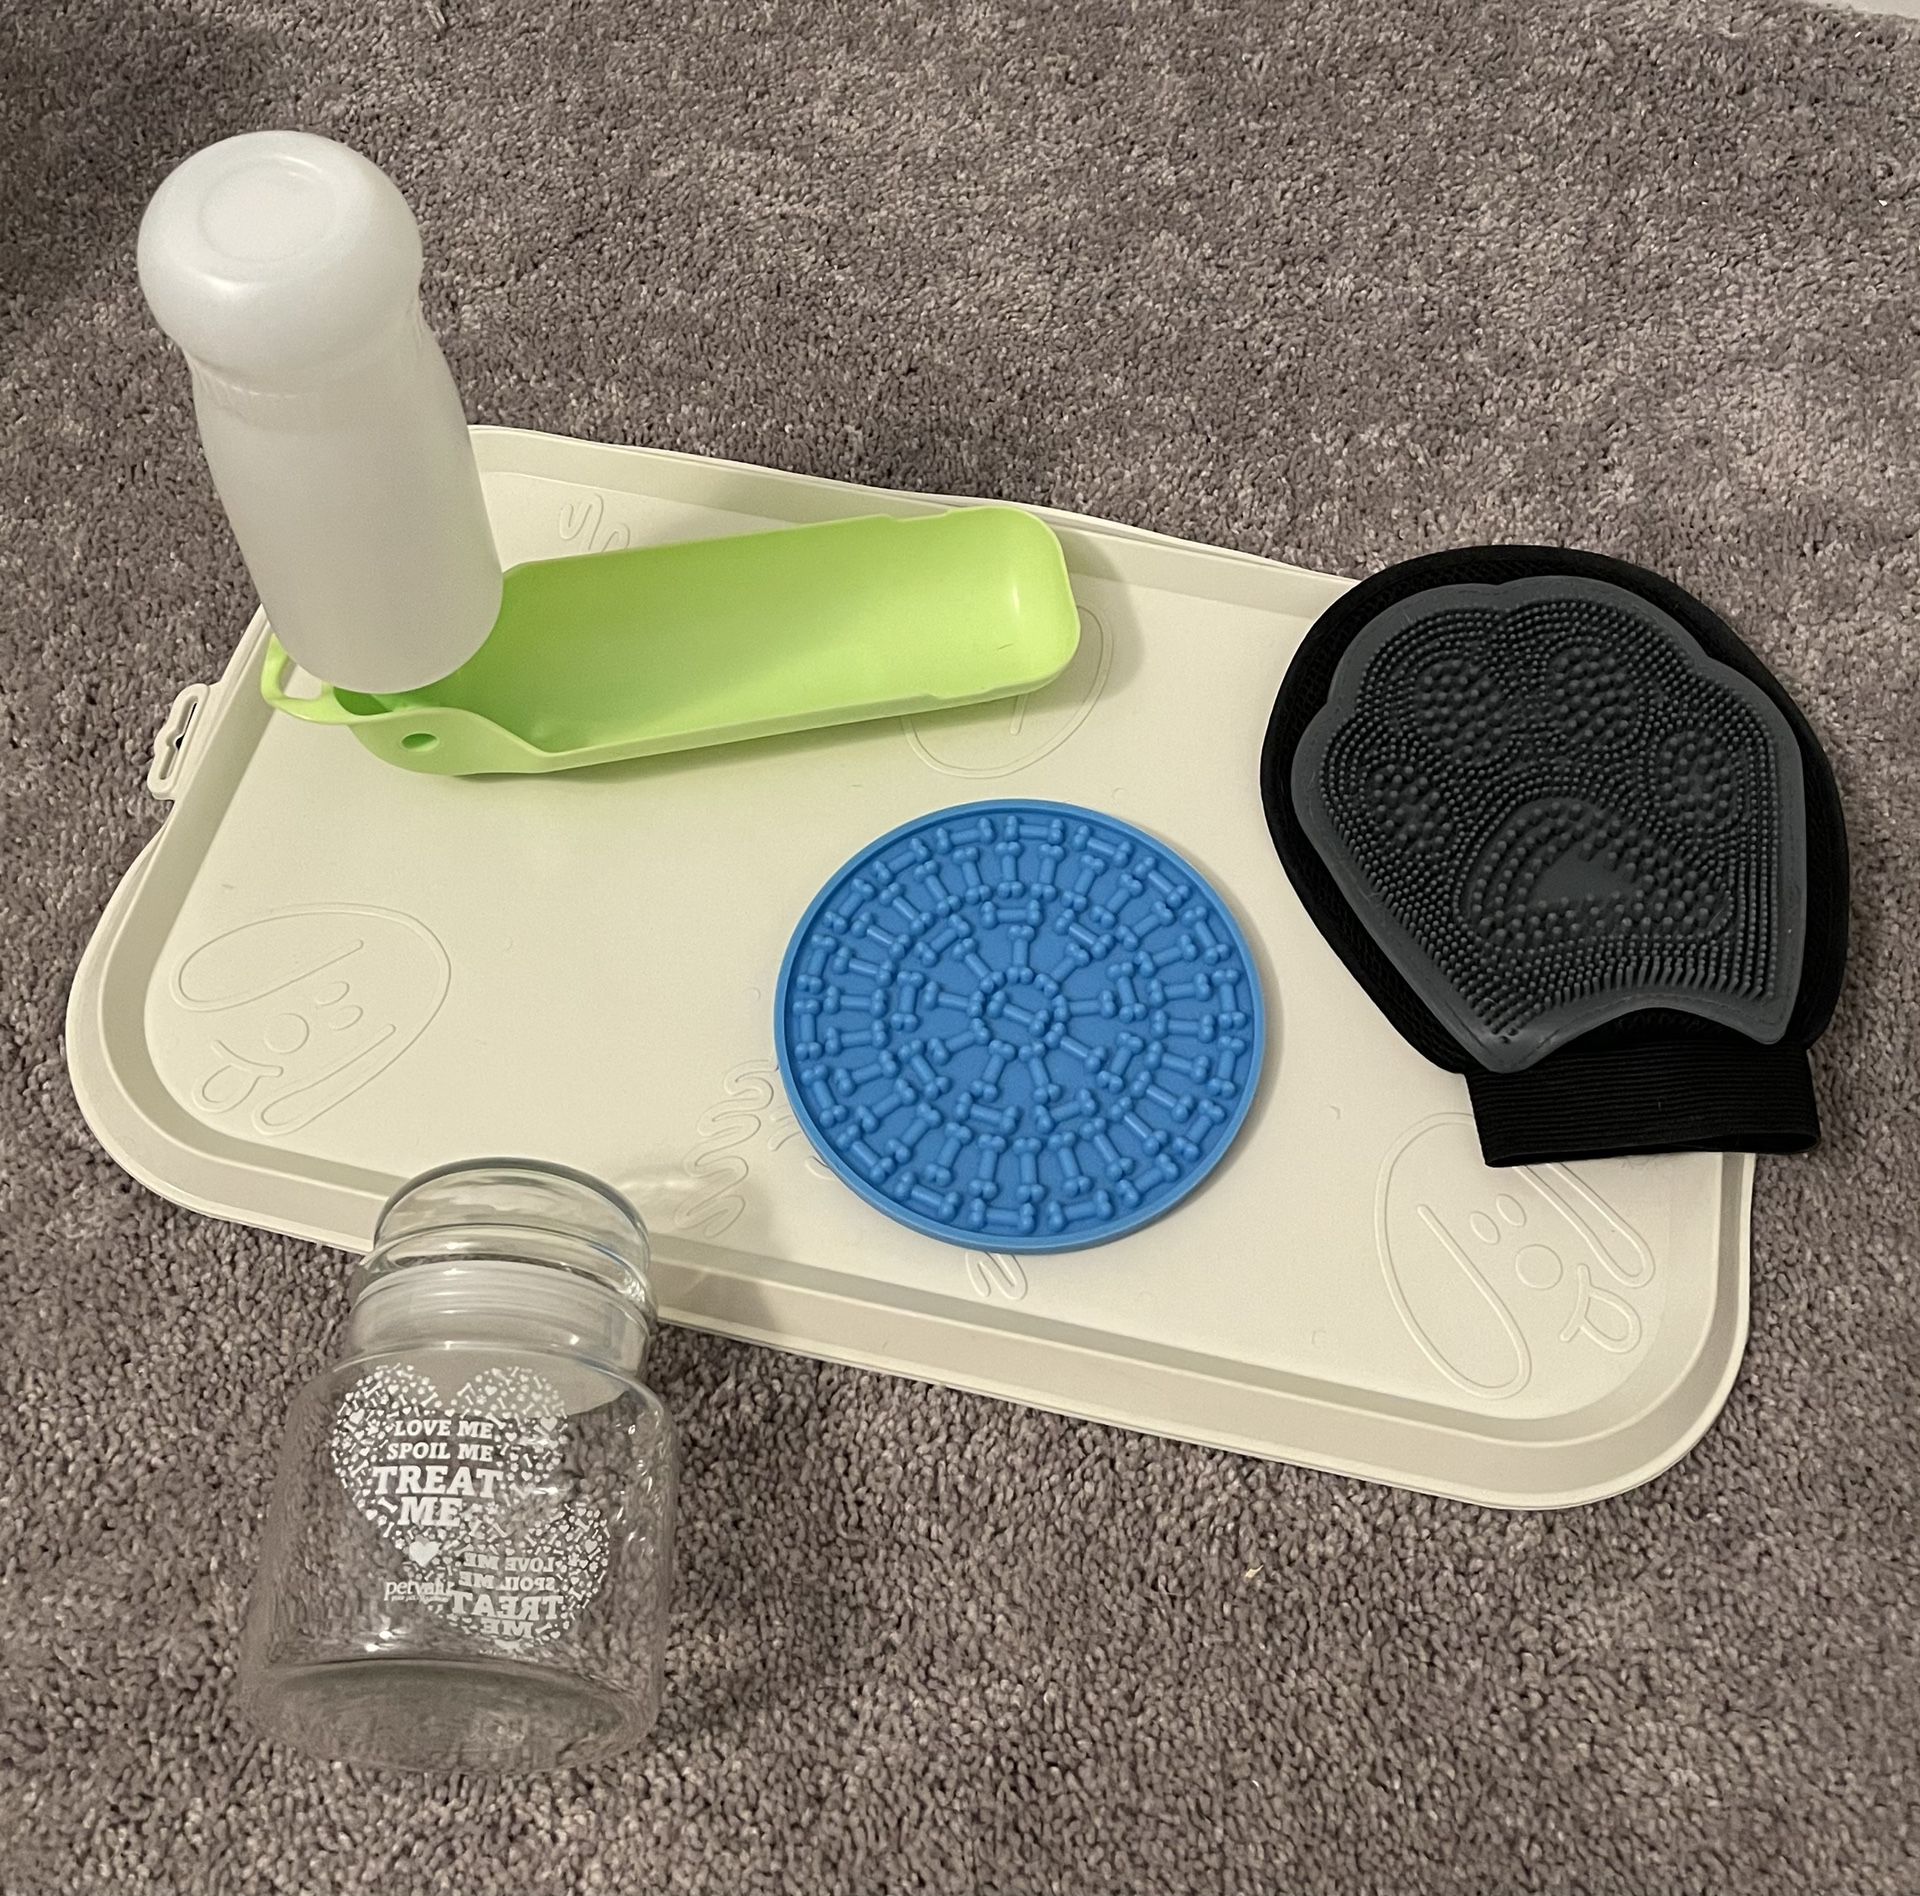 Pet Supplies - food mat, lick pad, travel water bottle/bowl, small treat jar, grooming glove